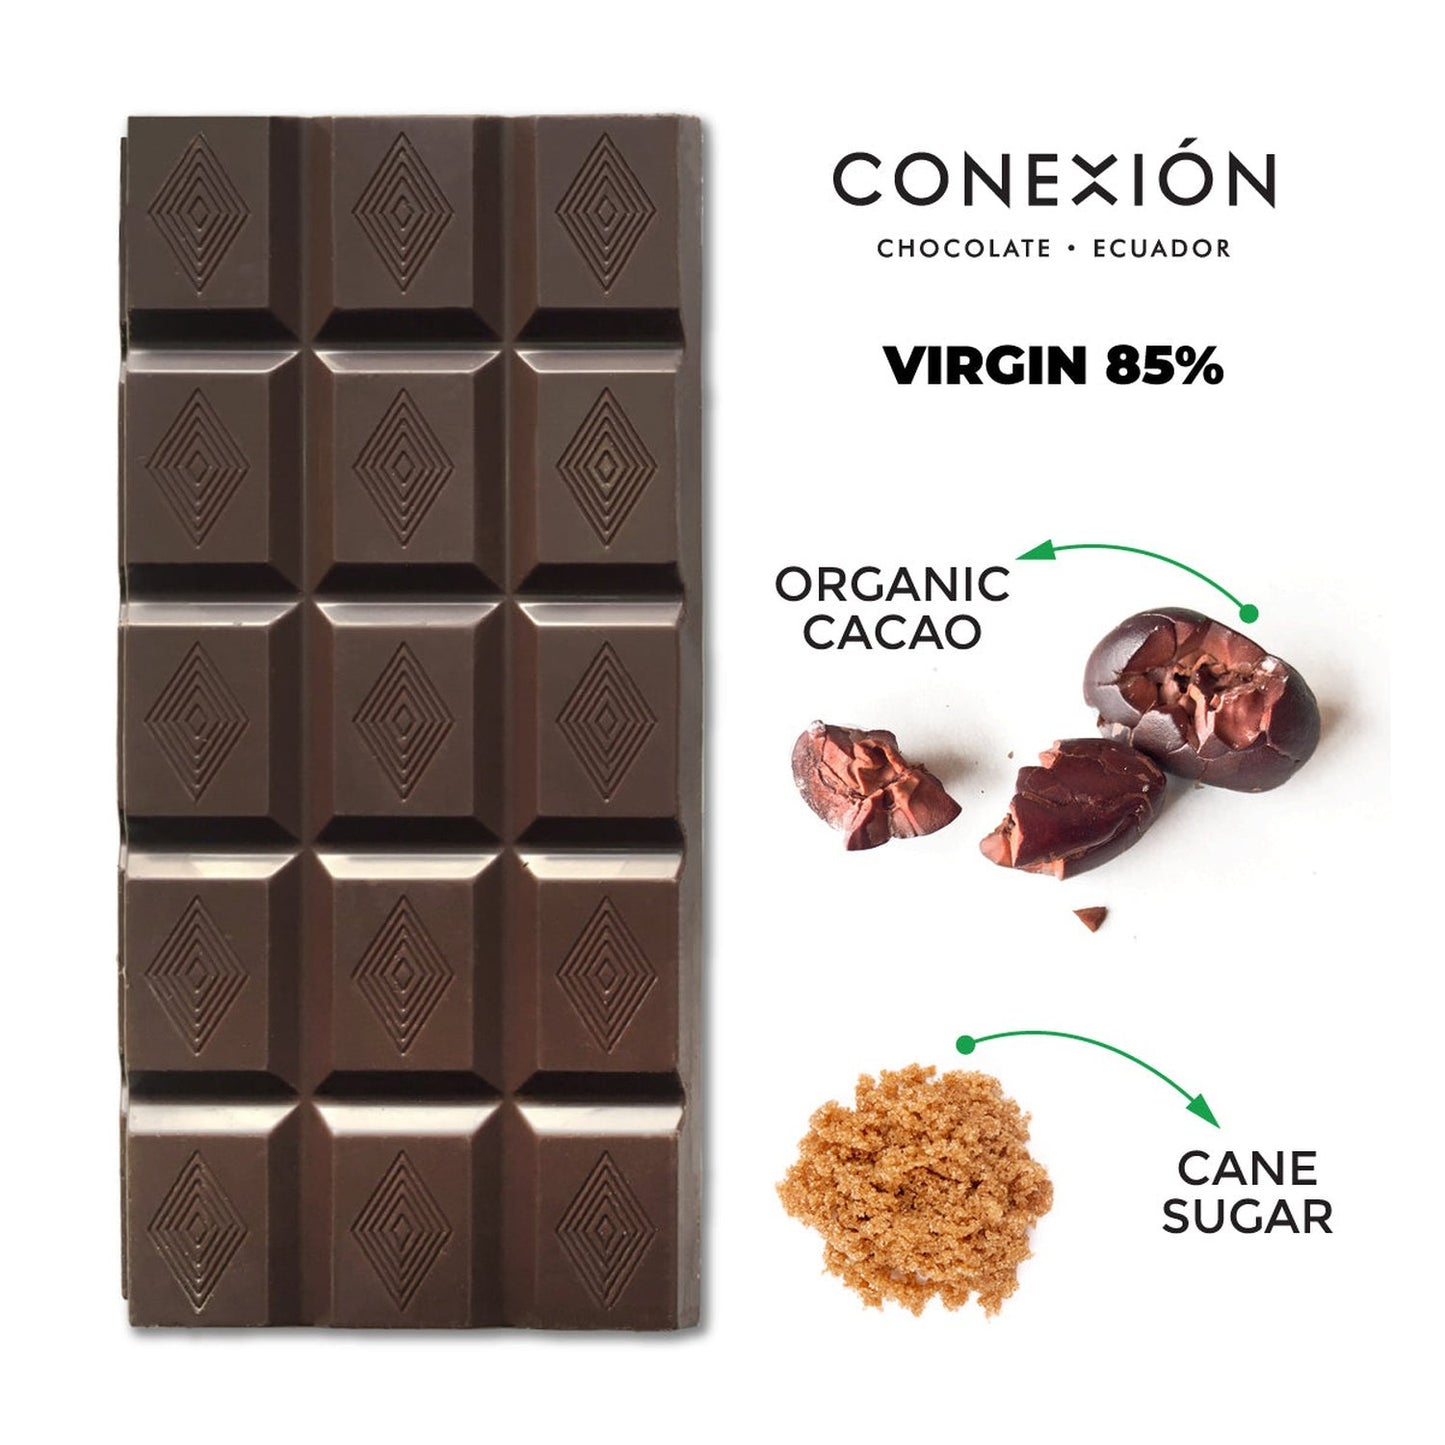 Virgin 85% conexion-chocolates